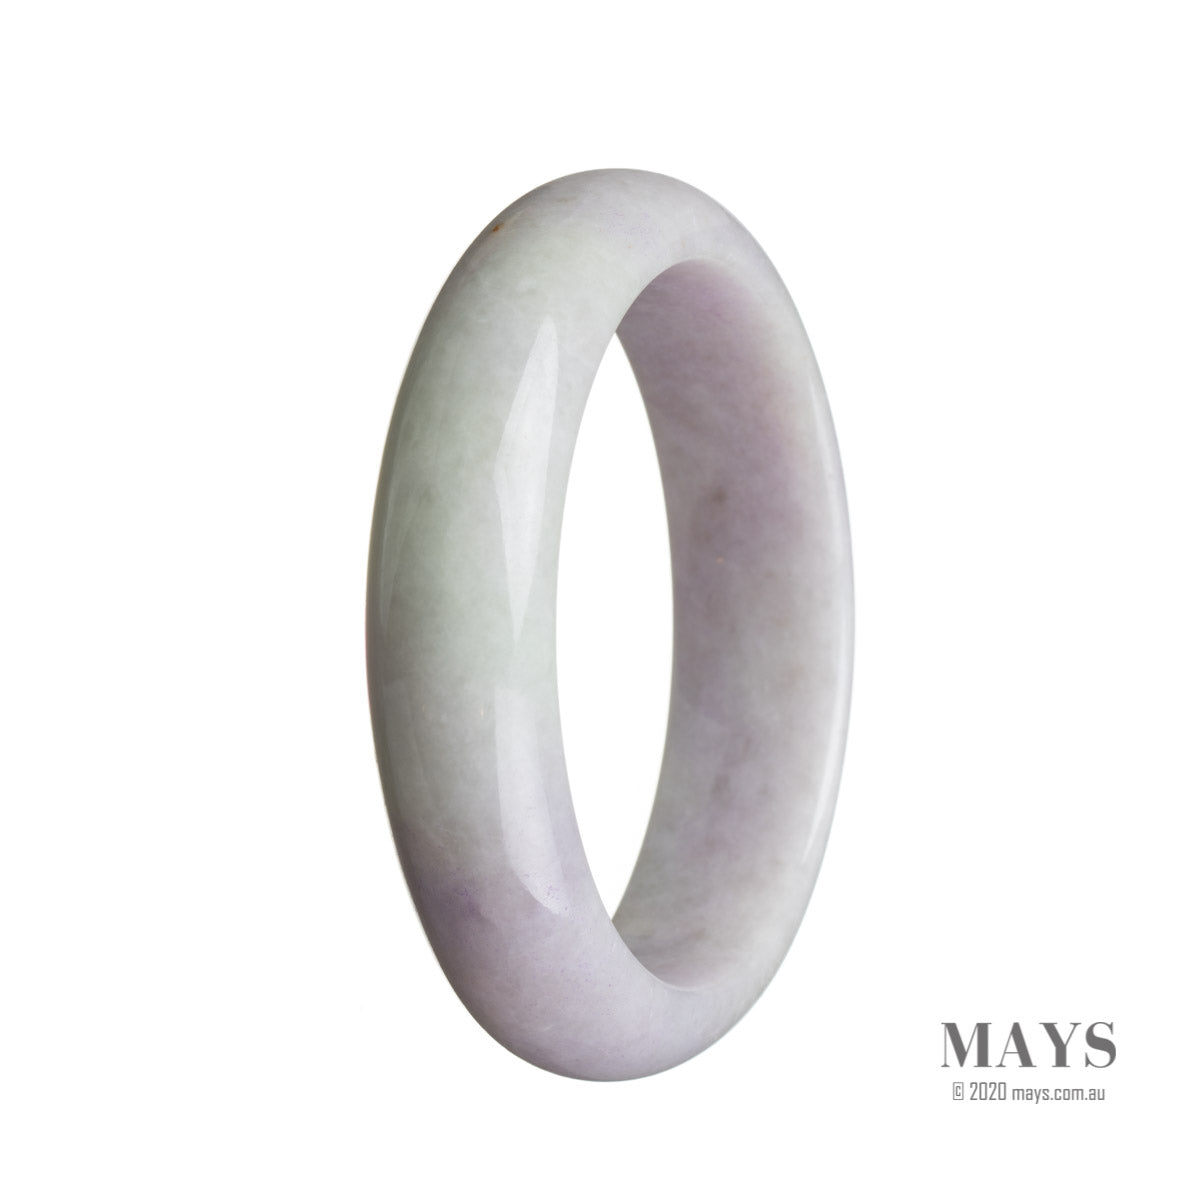 A beautiful lavender jadeite bangle bracelet with a half-moon design, measuring 58mm.